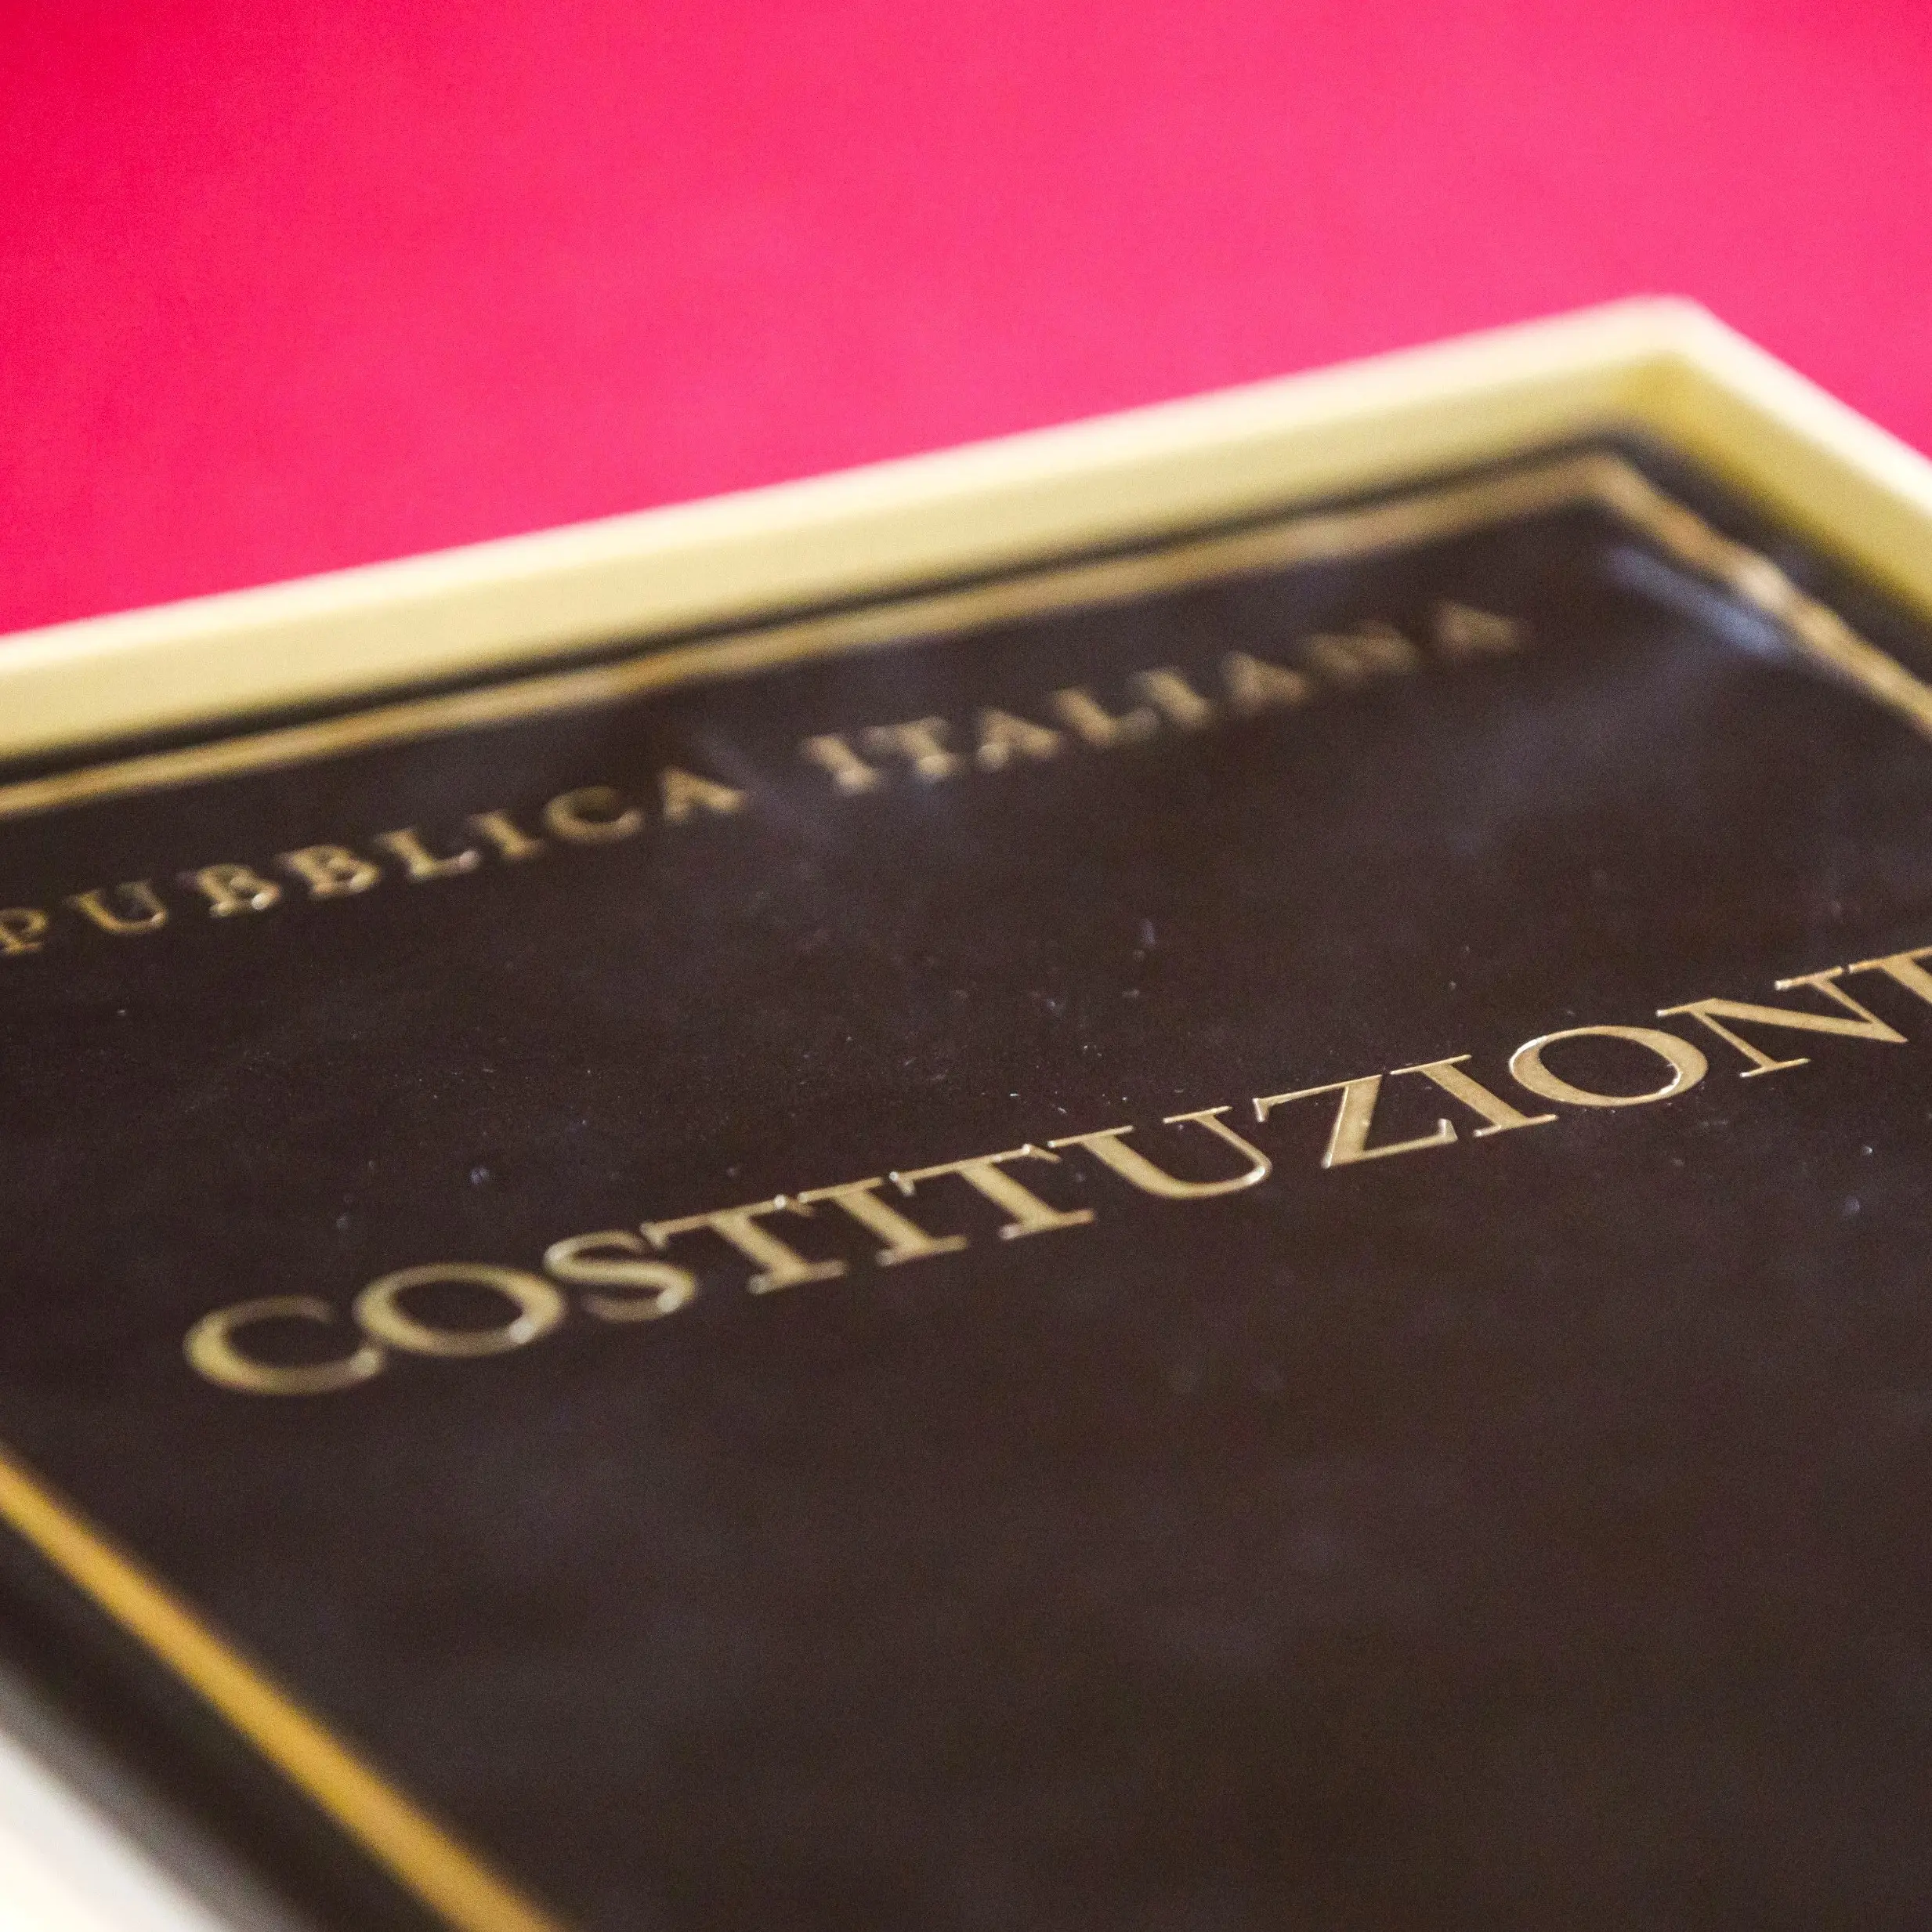 Insieme per la Costituzione